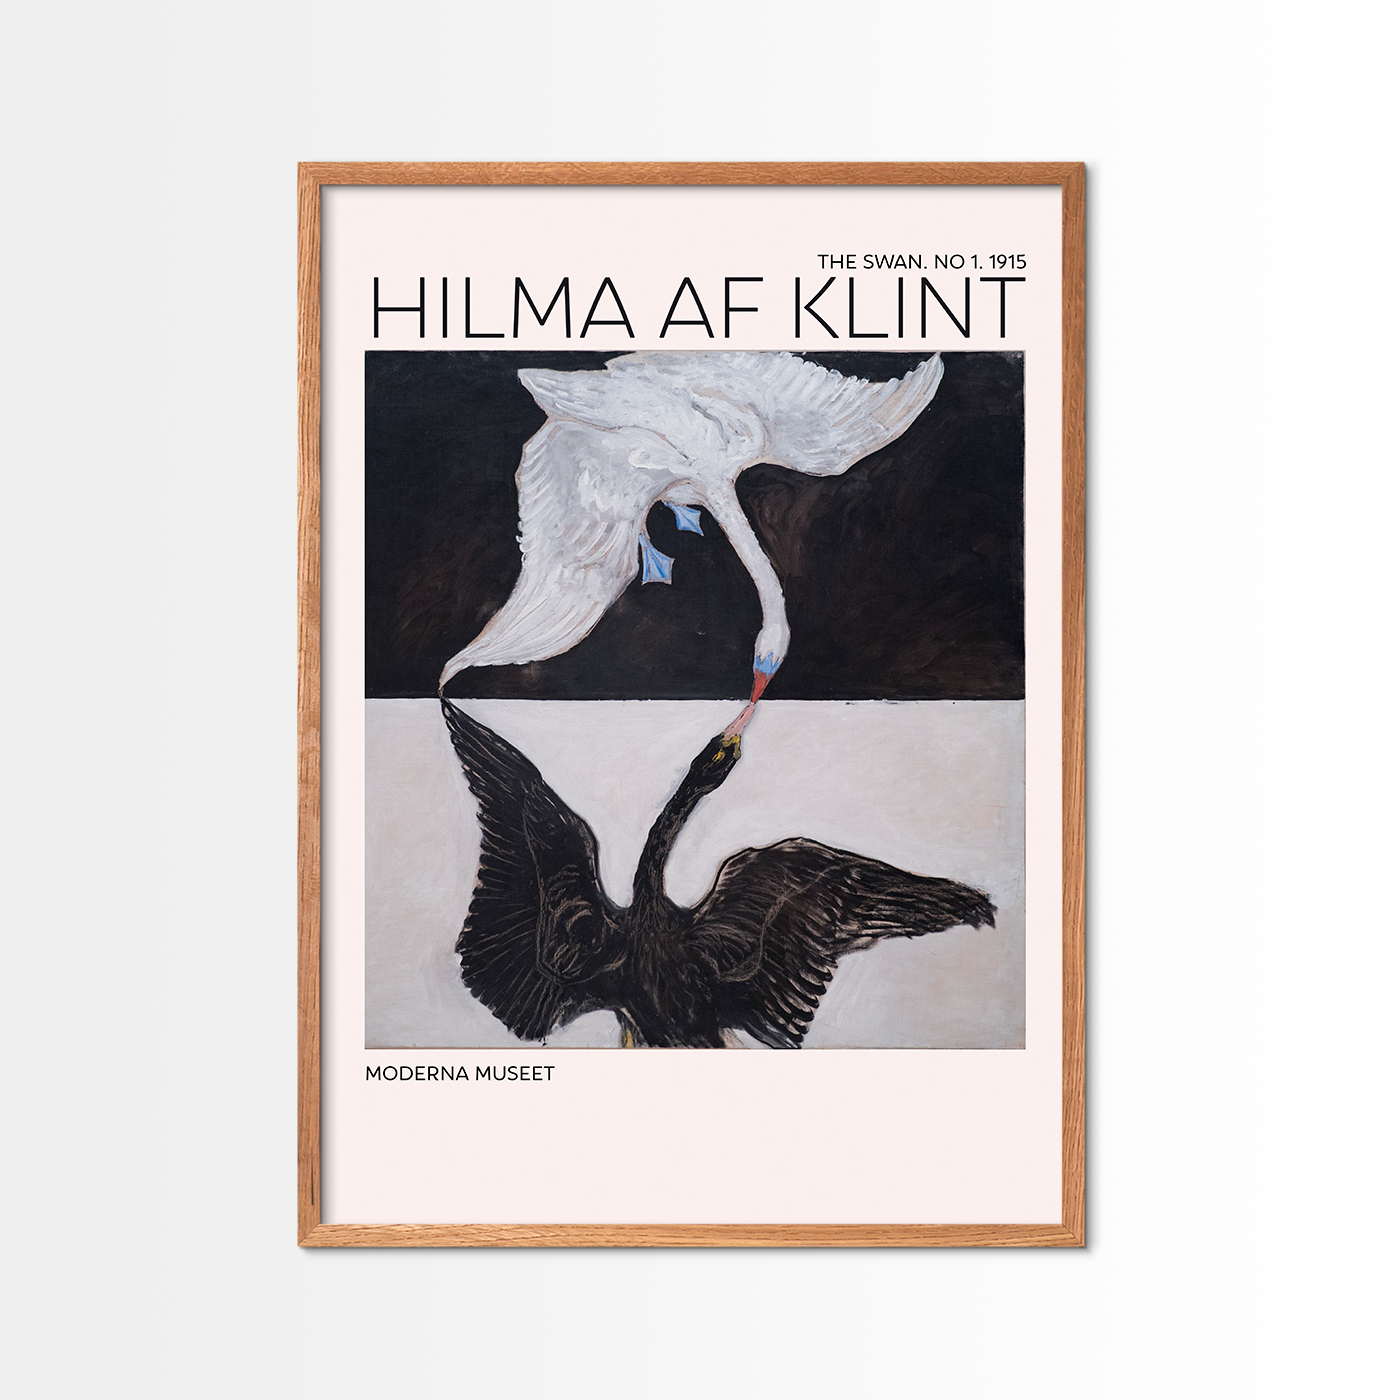 The Swan No. 1 - Hilma Of Klint